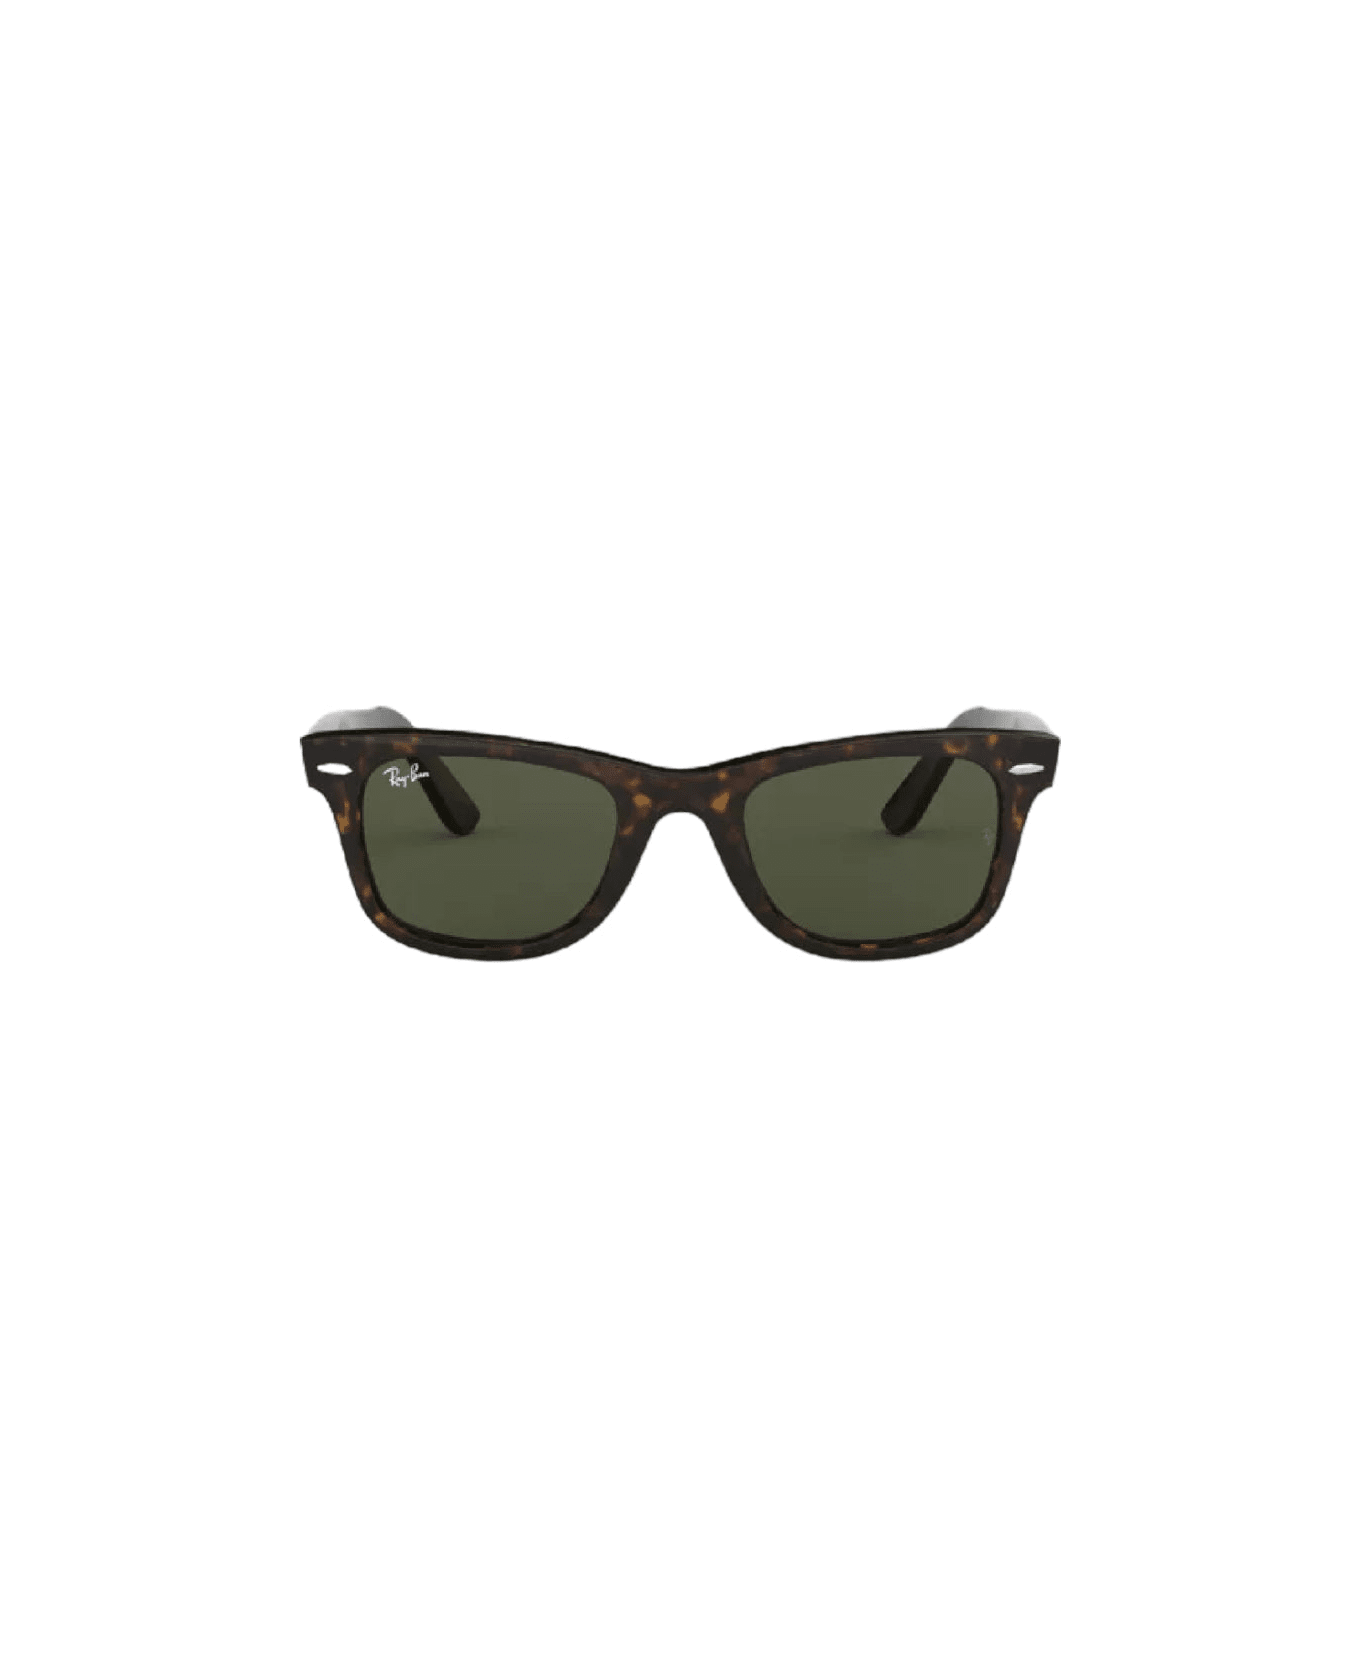 Ray-Ban Rb 2140 Sunglasses サングラス